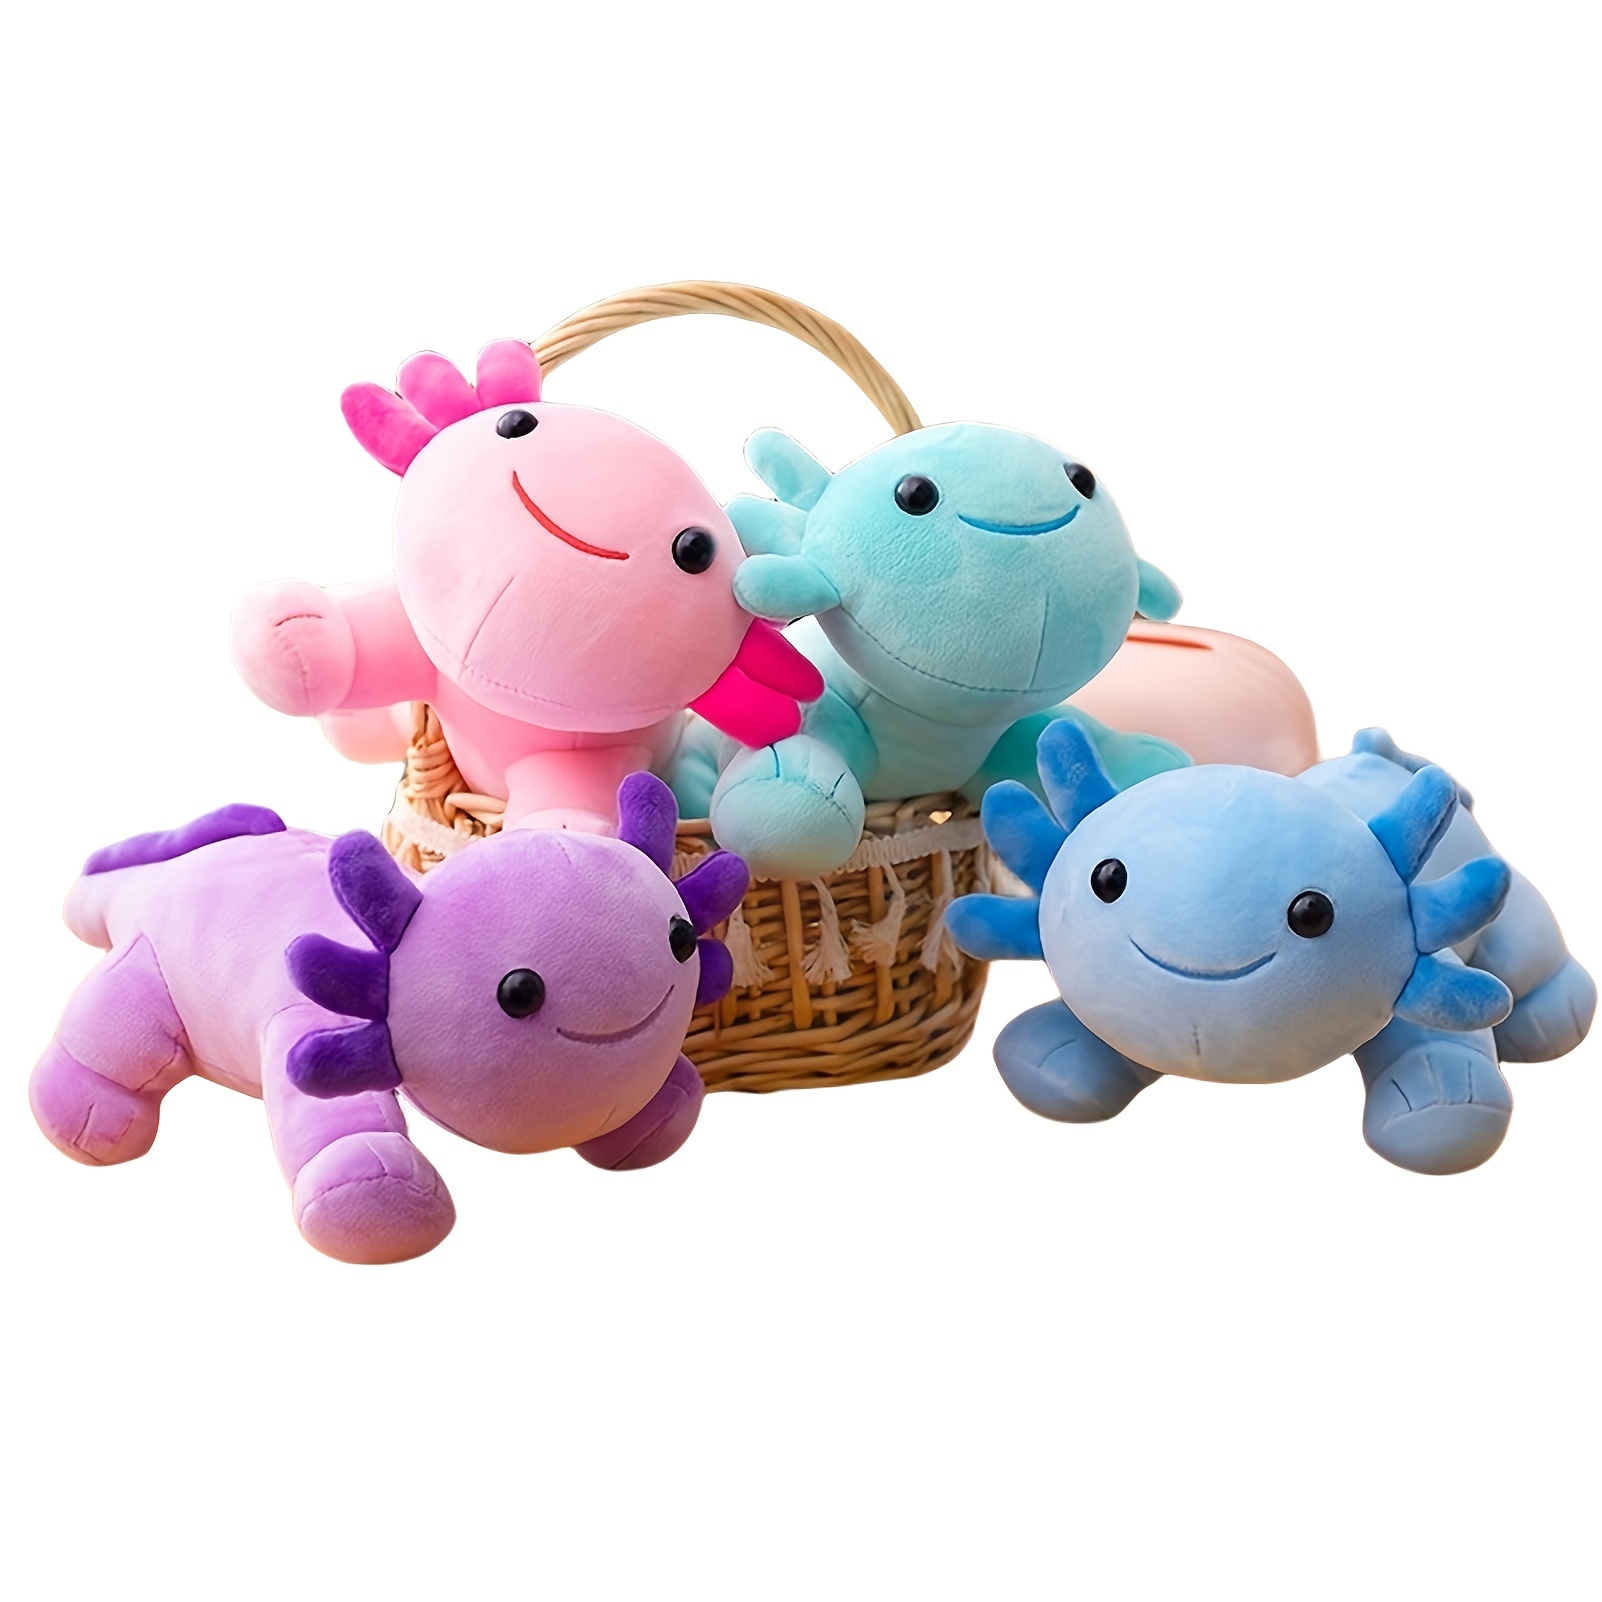 Axolotl Figurine toys